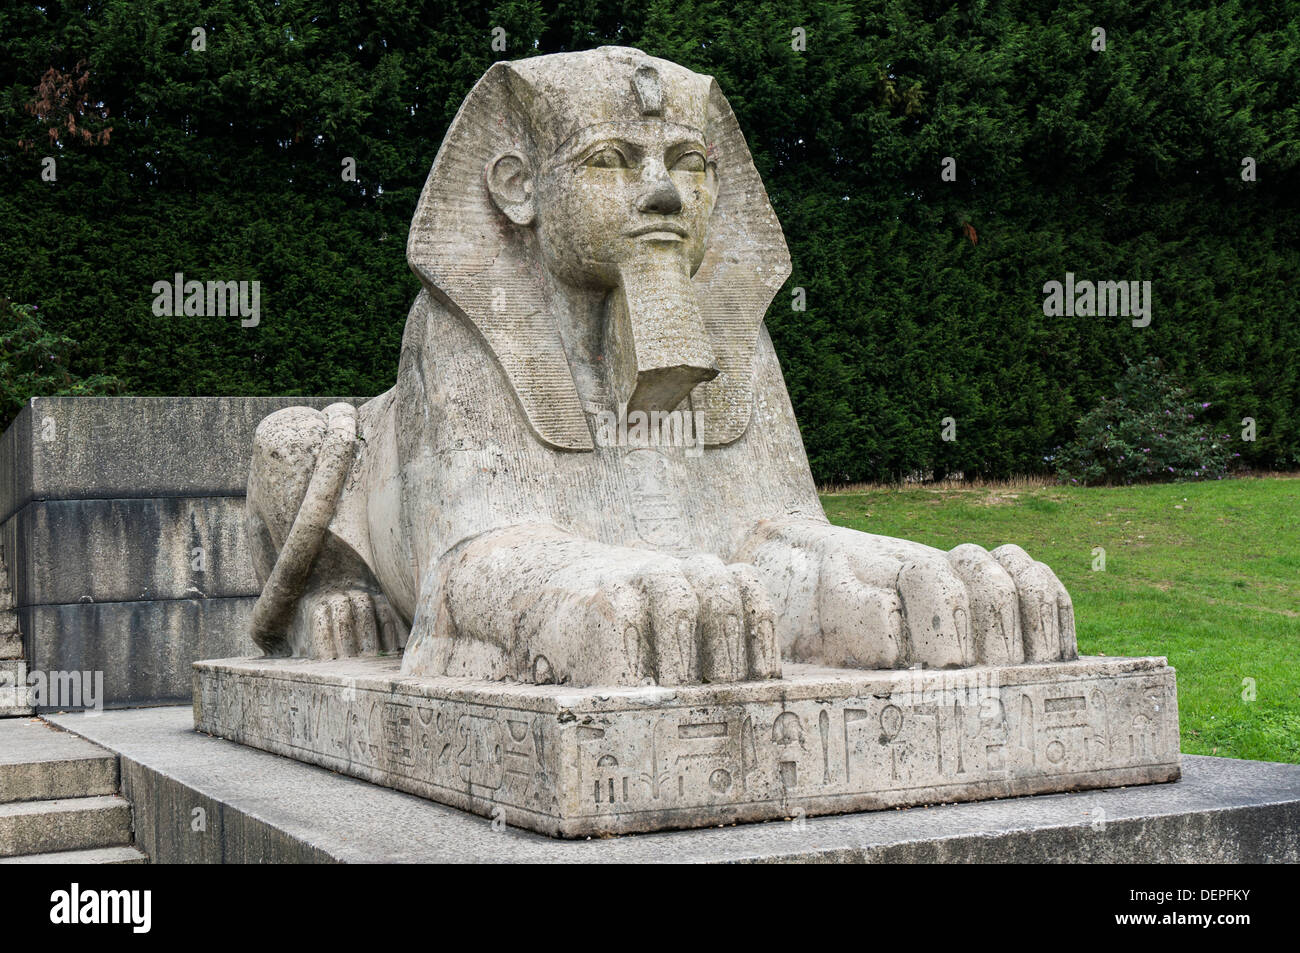 Stone sphinx statue, Crystal Palace park, London, England. Stock Photo